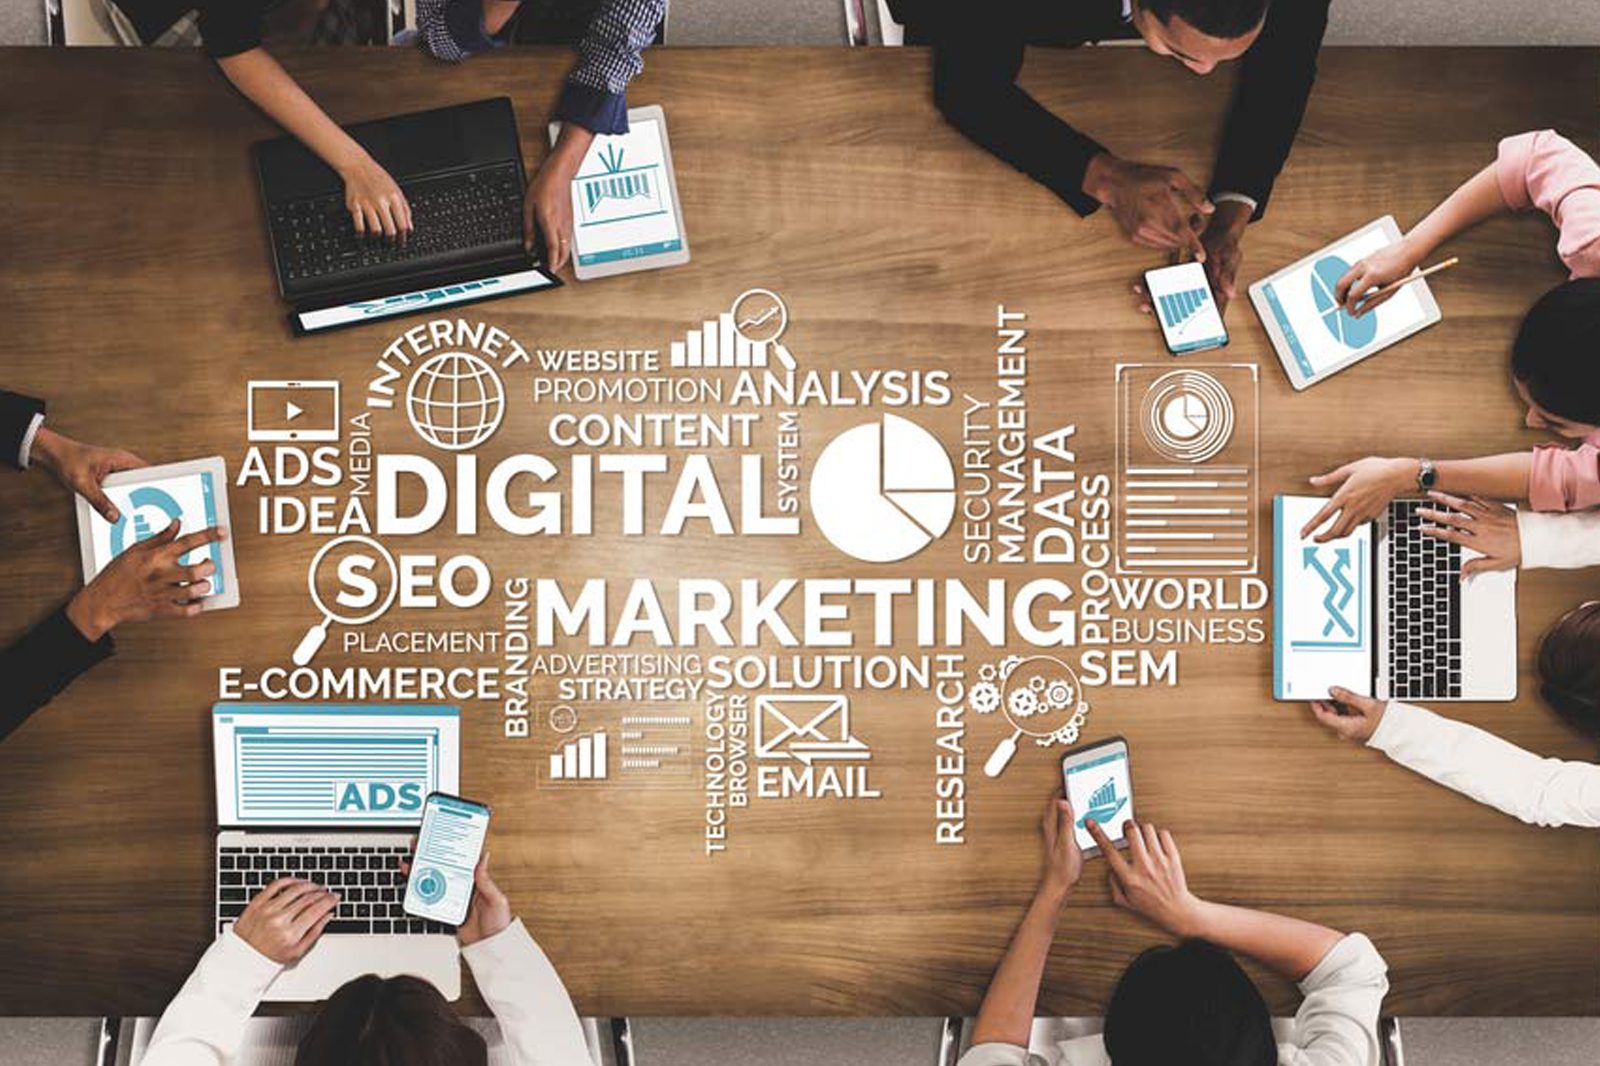 SEO, SMM, And SEM: The Three Digital Marketing Tiers